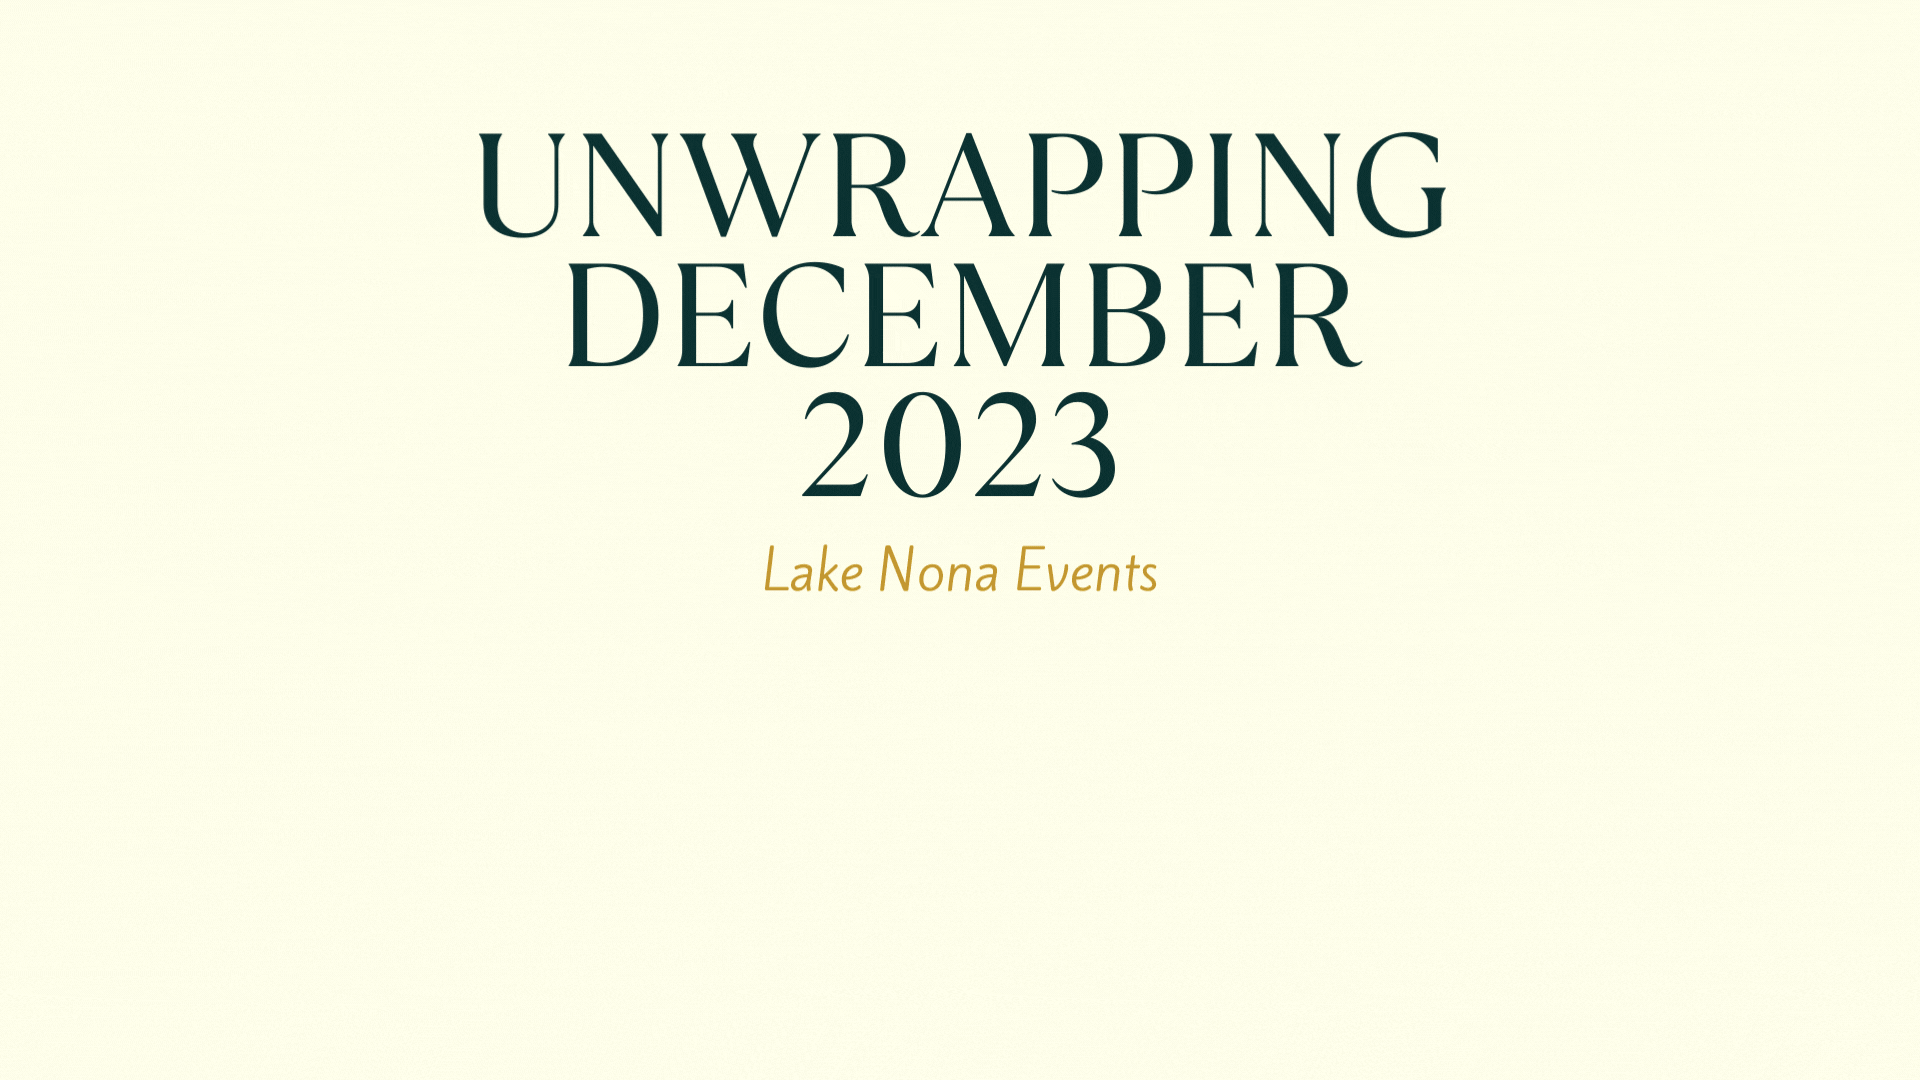 Unwrapping December 2023 at Lake Nona